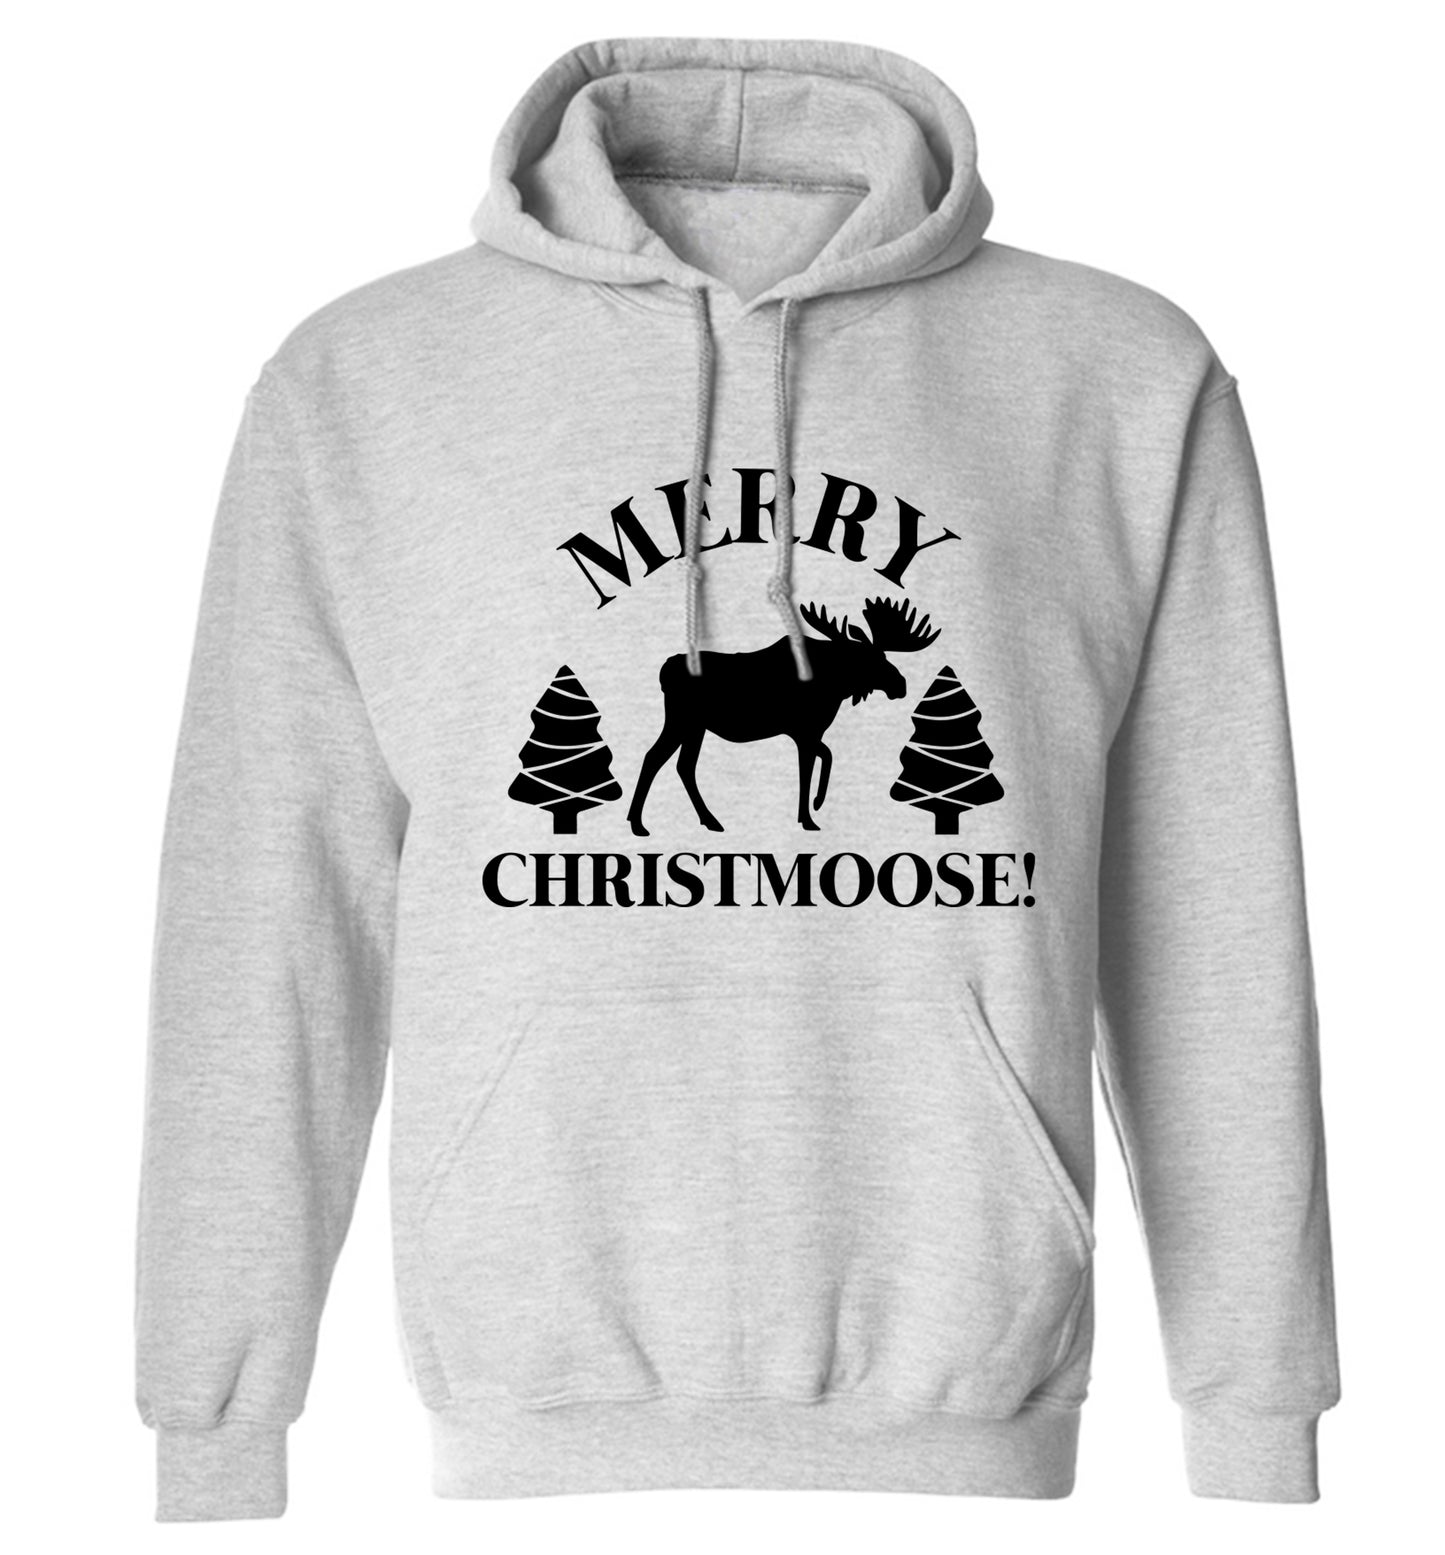 Merry Christmoose adults unisex grey hoodie 2XL